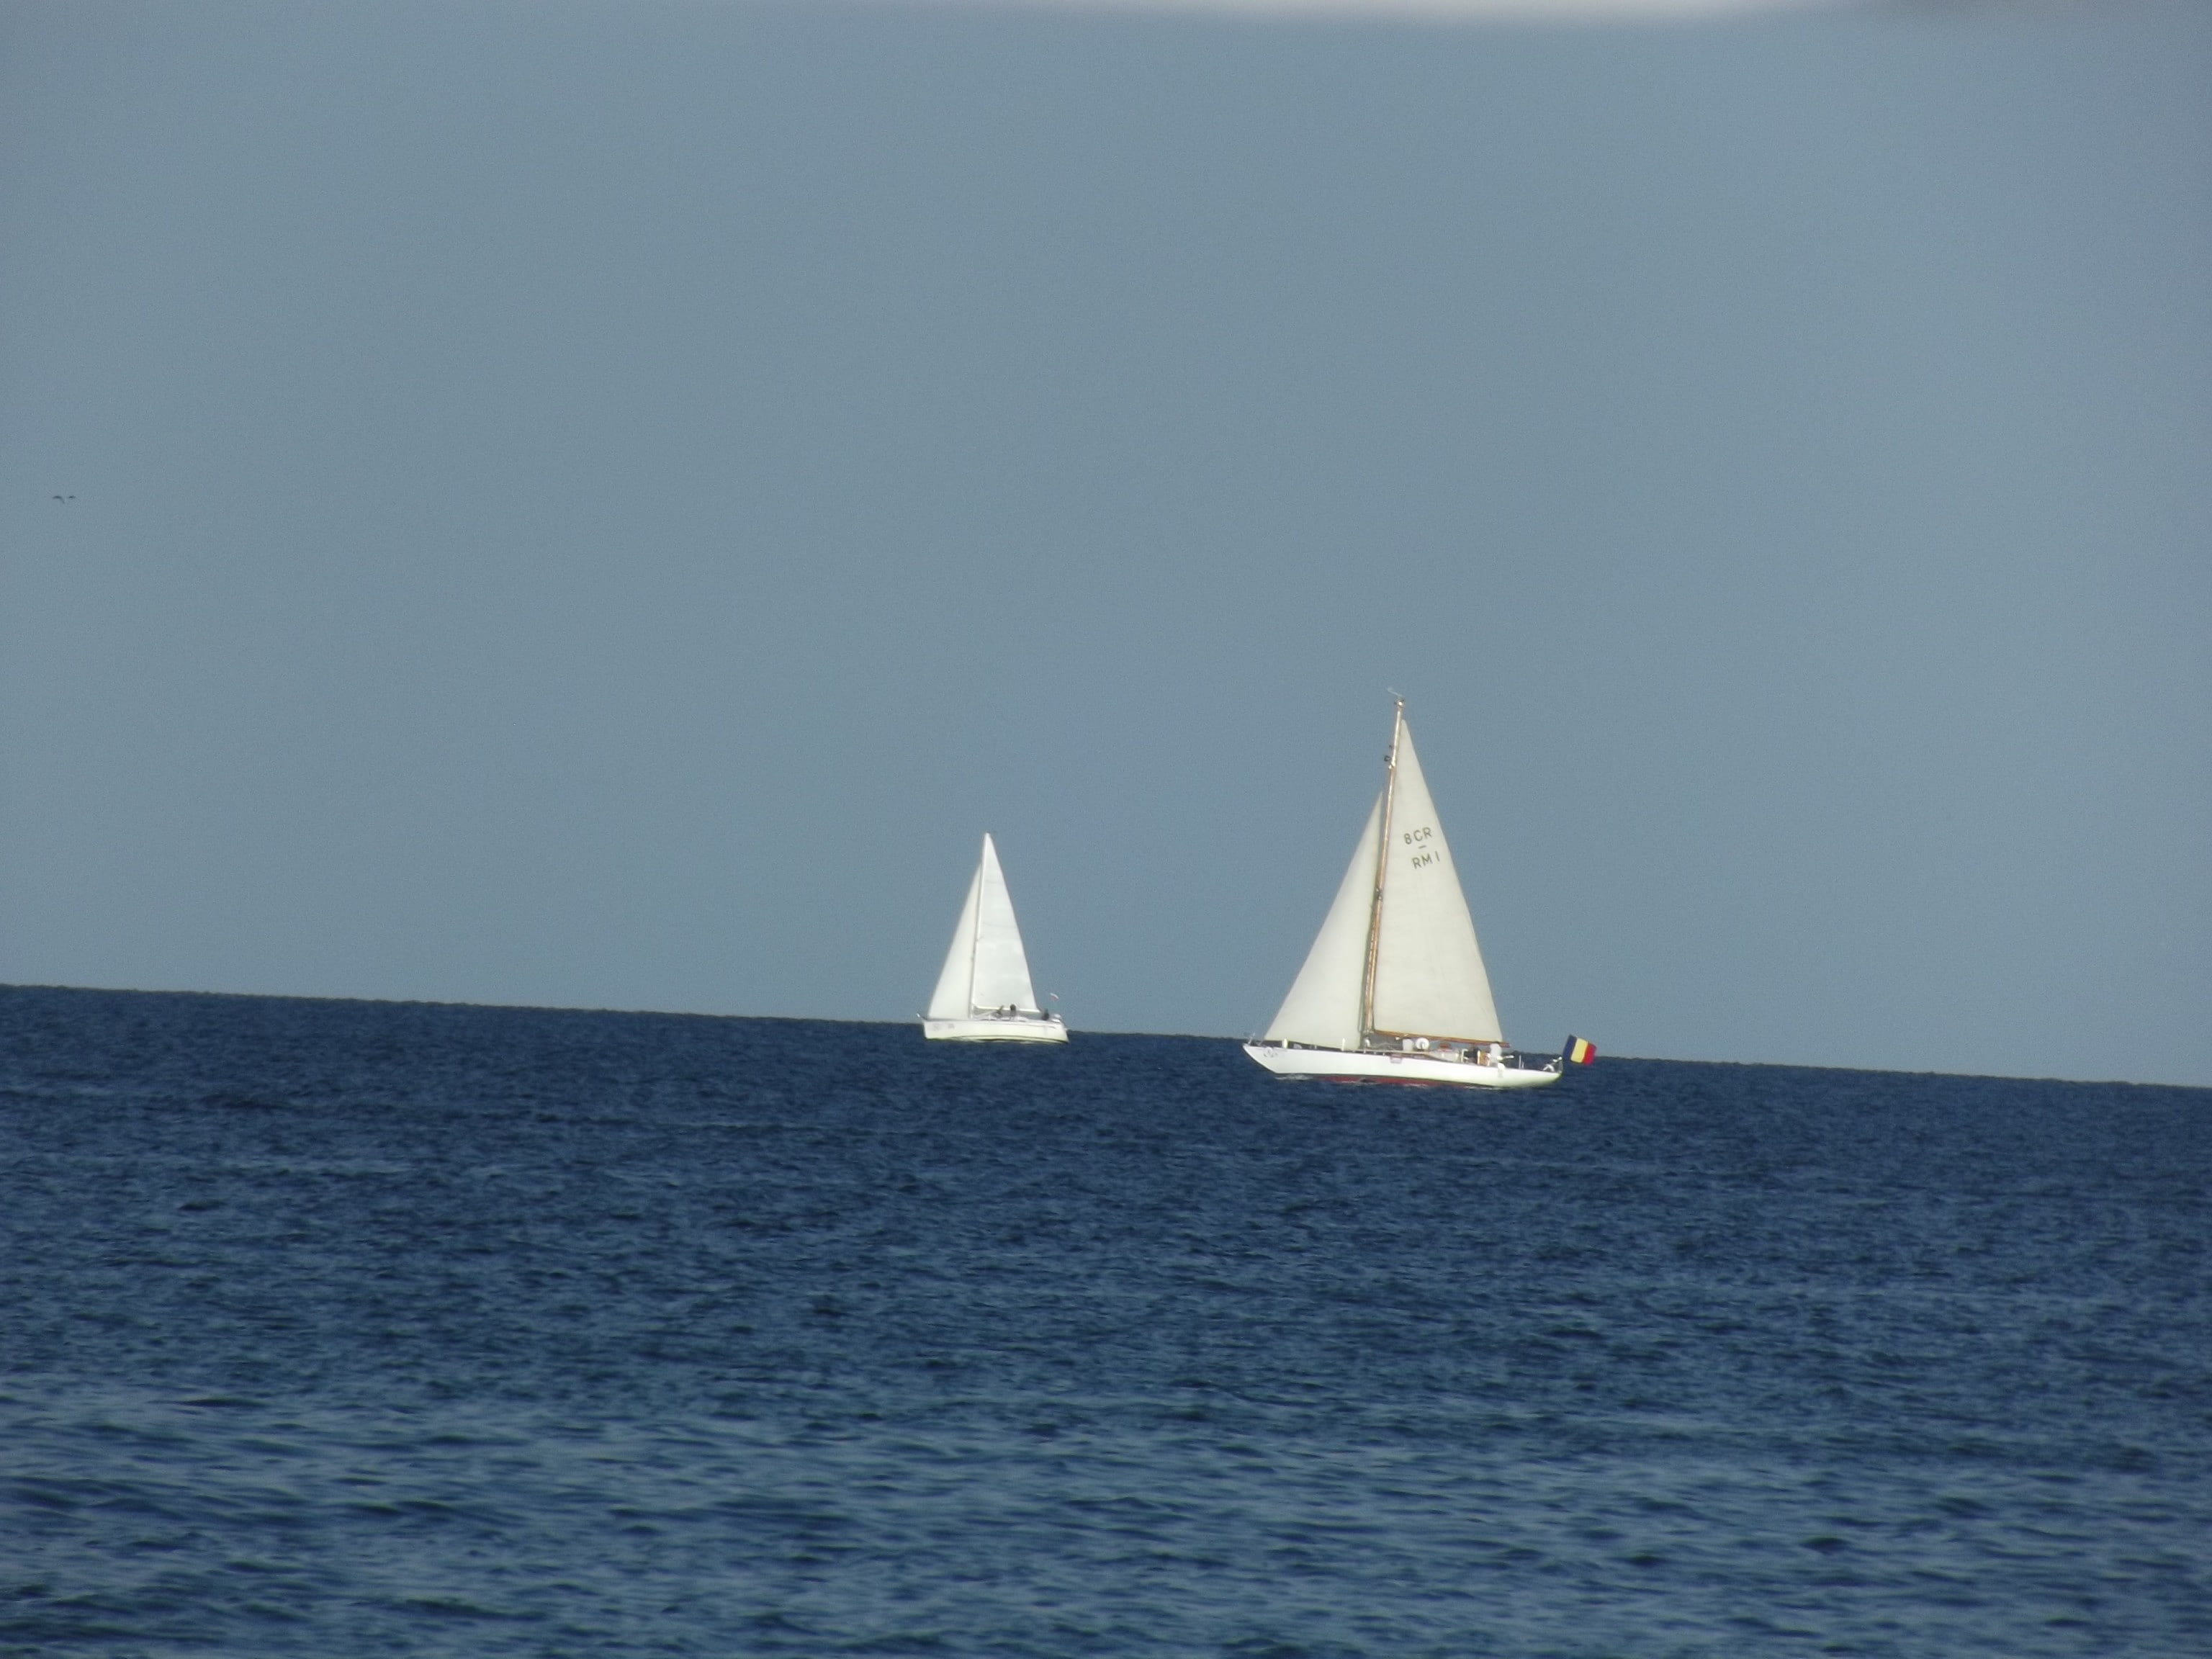 water, sea, sailboat, nautical vessel, sailing, transportation